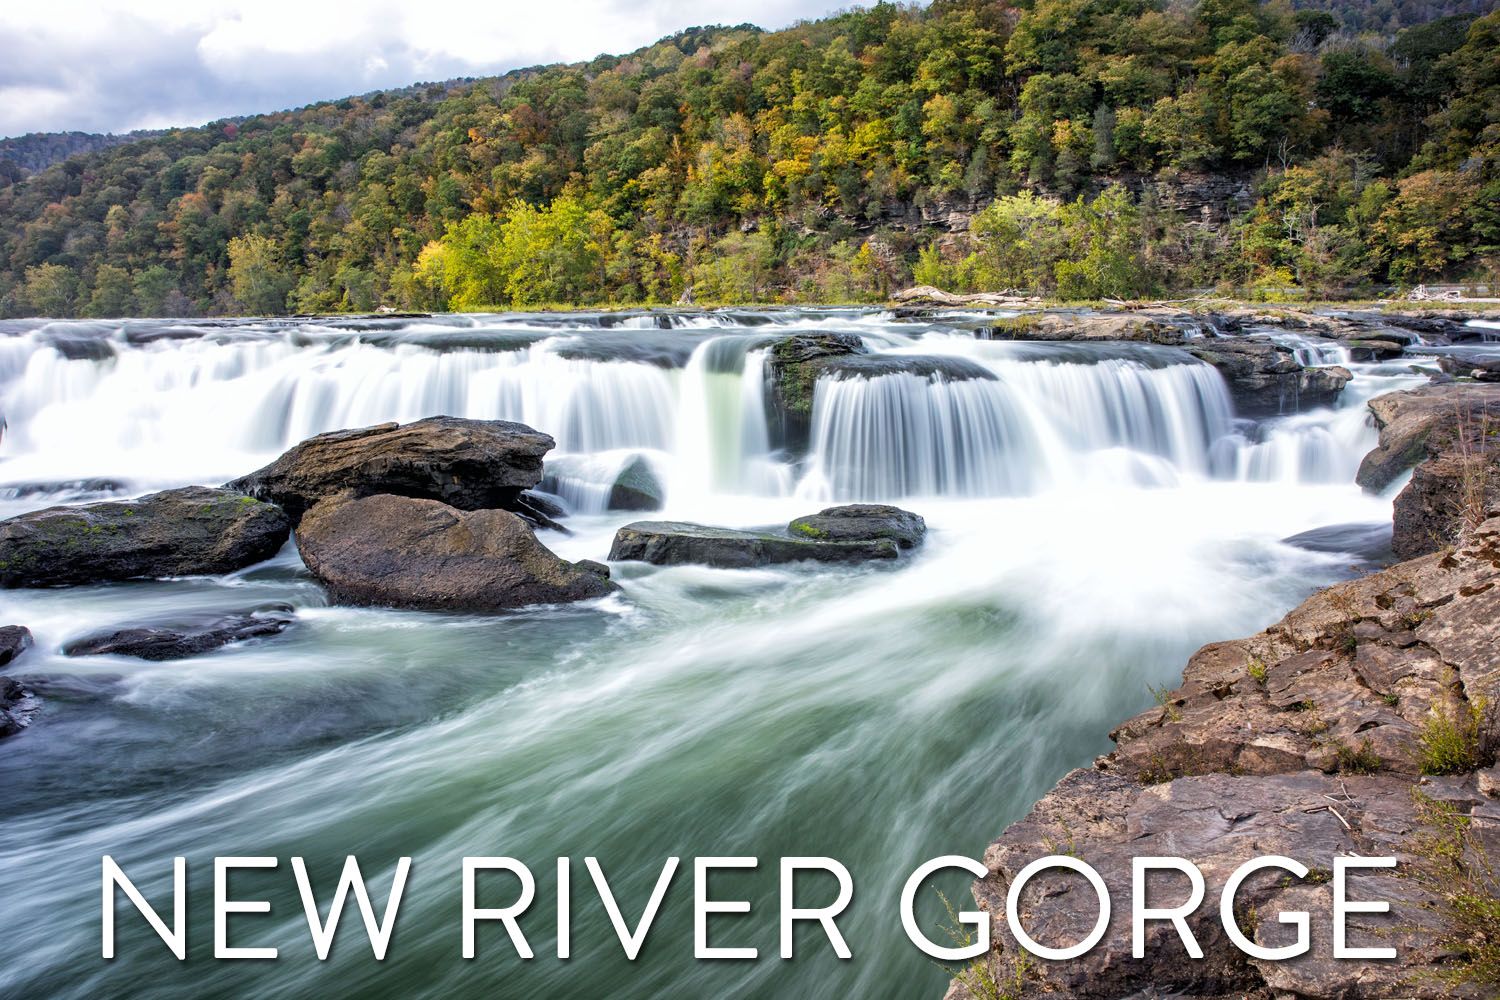 New River Gorge National Park